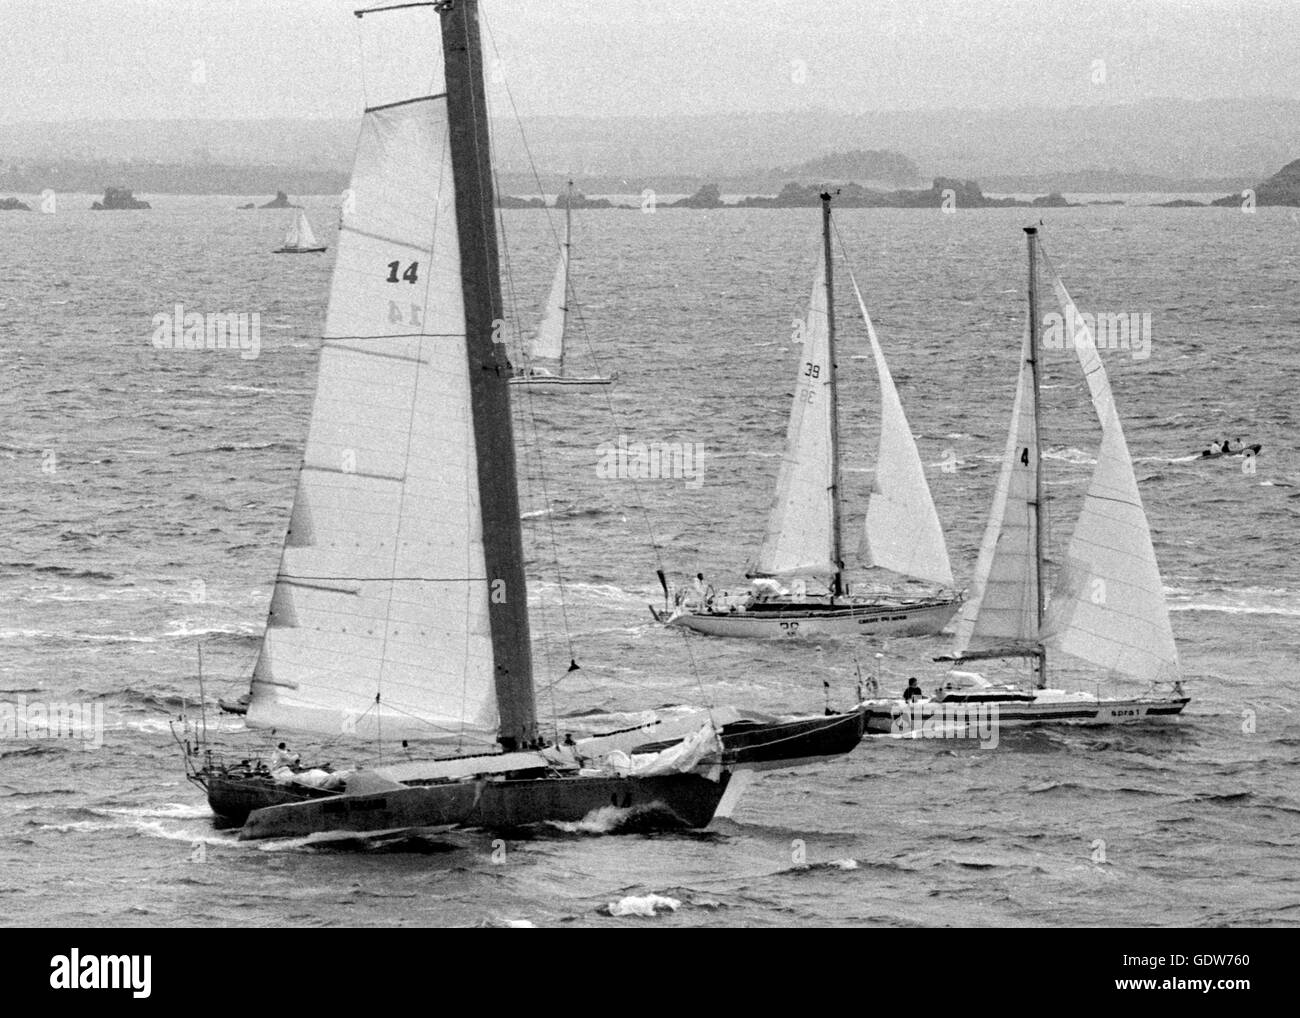 AJAX-NEWS-FOTOS. 7. NOVEMBER 1982. ST. MALO, FRANKREICH. -ROUTE DU RHUM RACE - PAUL RICARD, CREDIT DU NORD, SPRITZ 1 AM START. FOTO: JONATHAN EASTLAND/AJAX REF: 820711 821007 3 Stockfoto